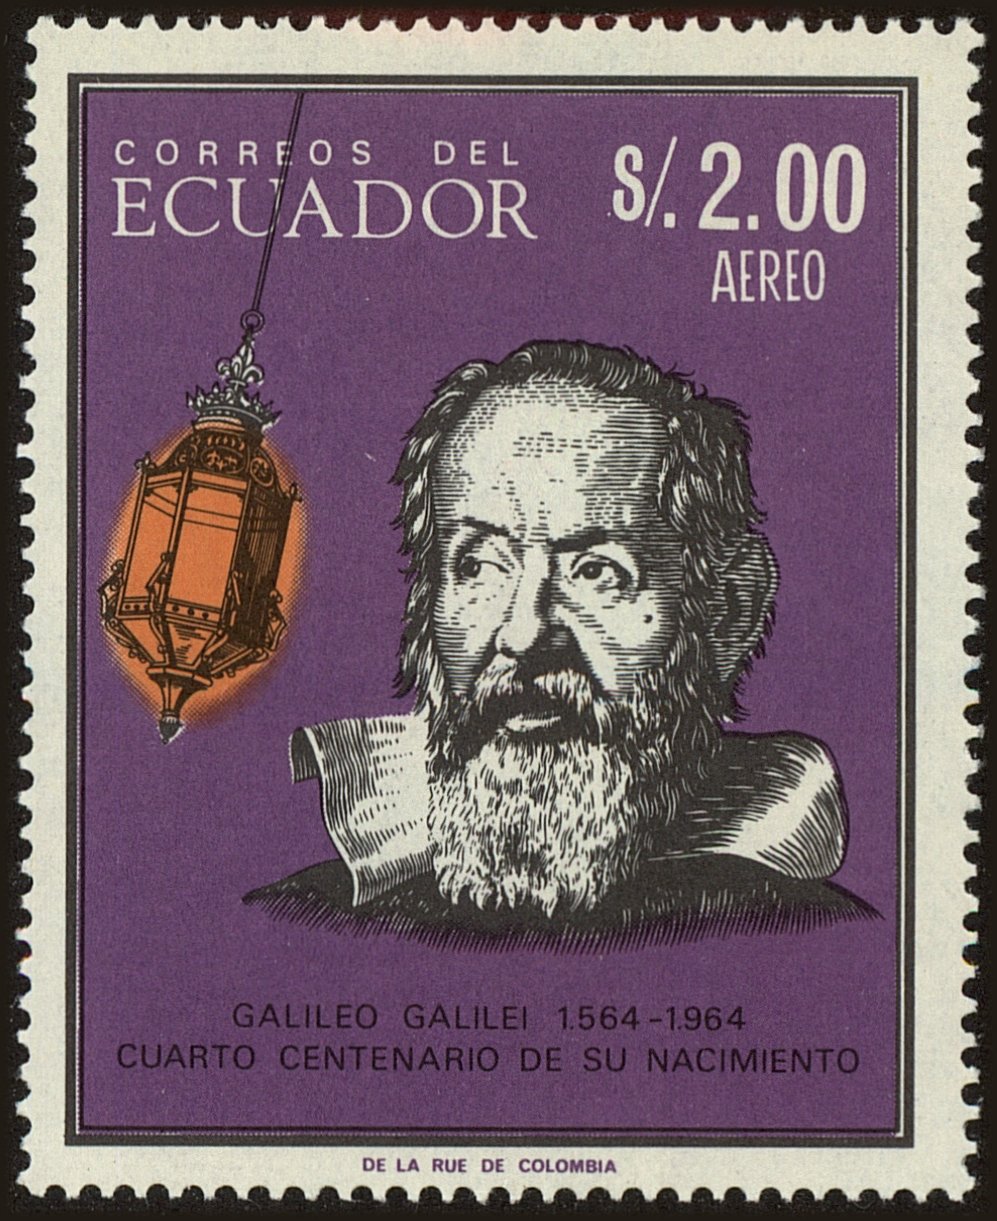 Front view of Ecuador 750B collectors stamp